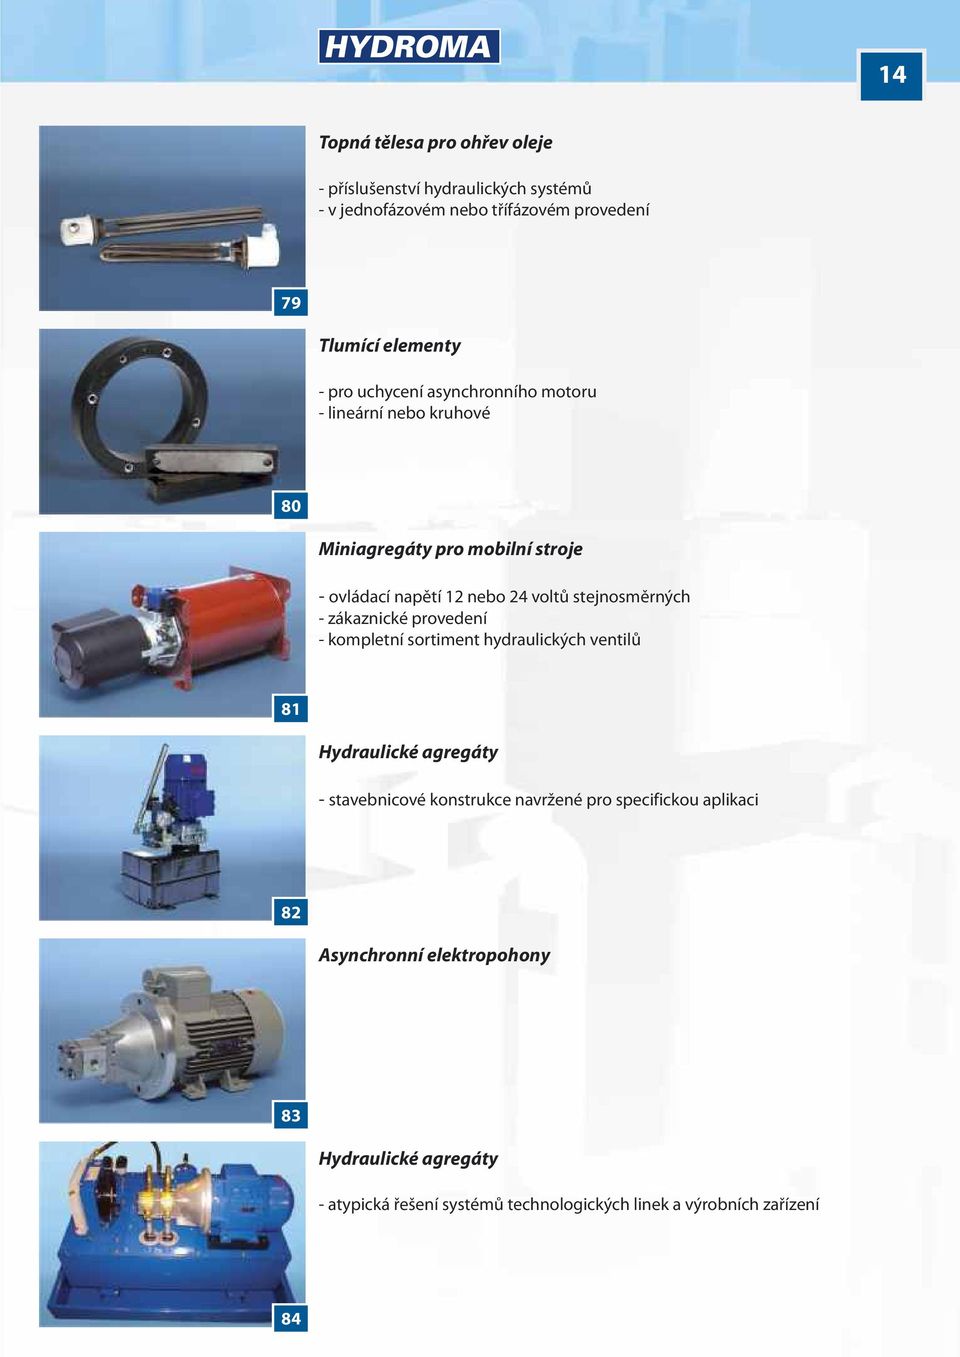 stejnosmìrných - zákaznické provedení hydraulických ventilù 81 3 Hydraulické agregáty - stavebnicové konstrukce navržené pro